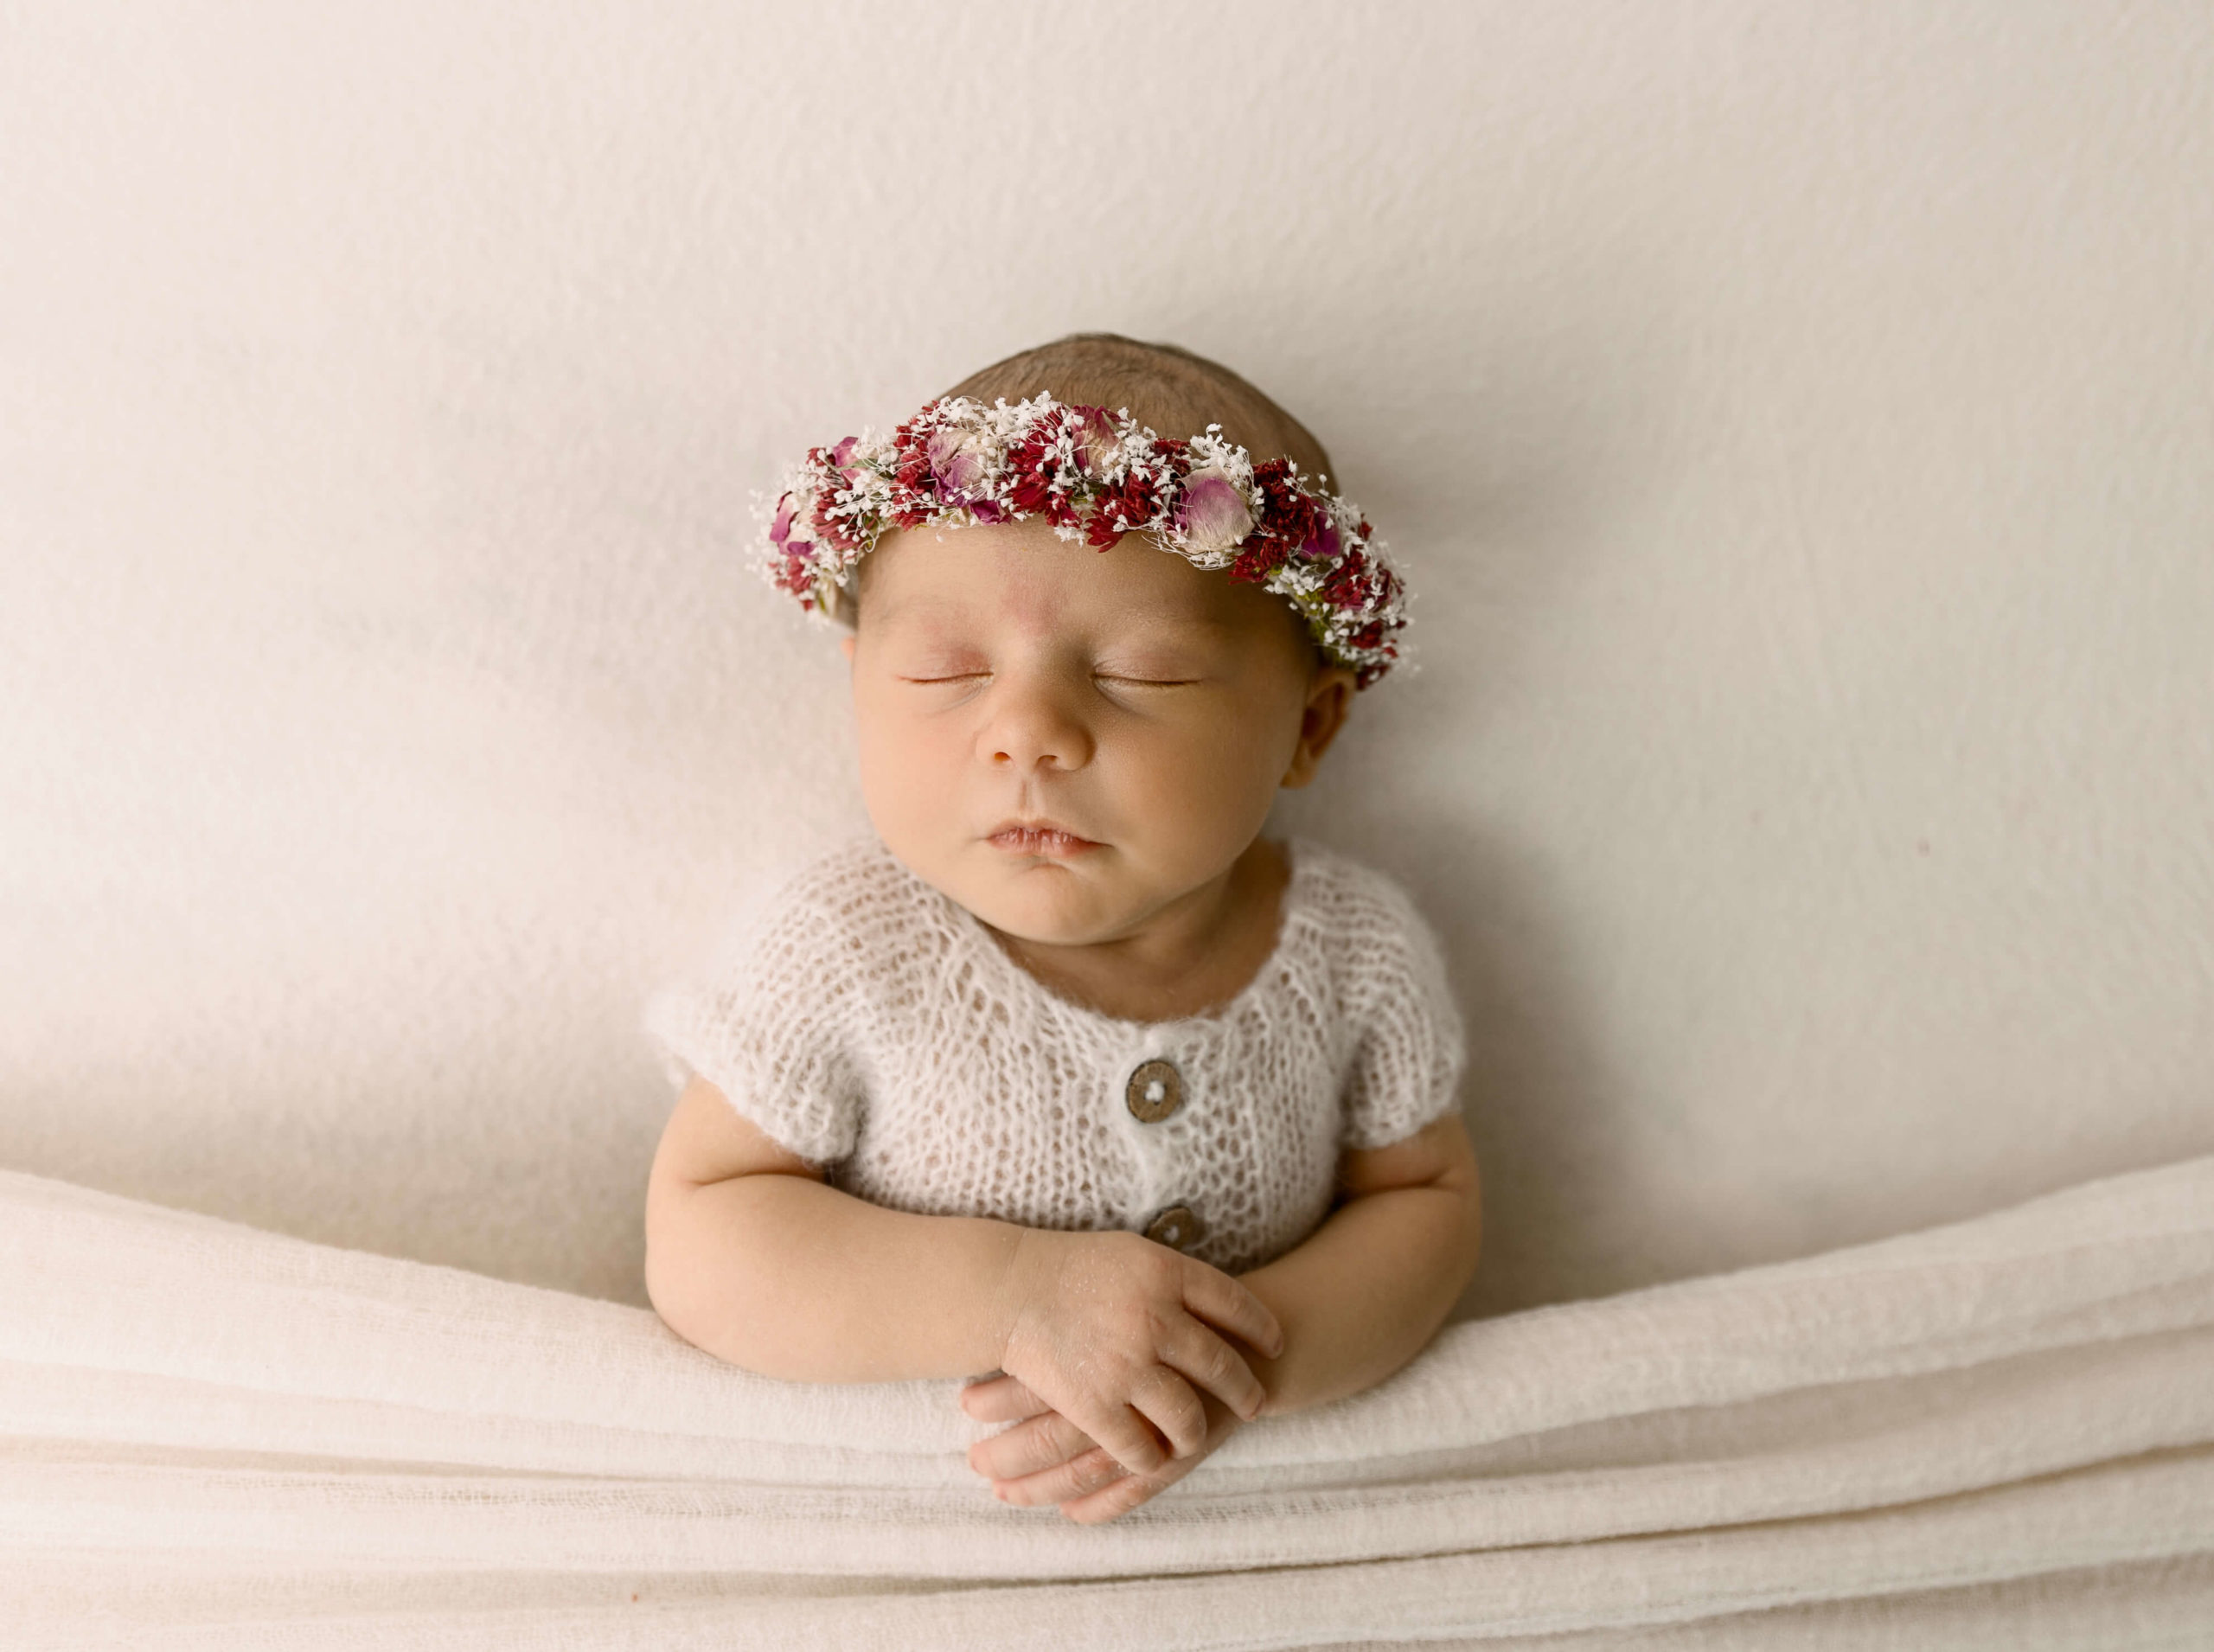 Newborn photo of a baby girl wearing a beautiful flower headband.